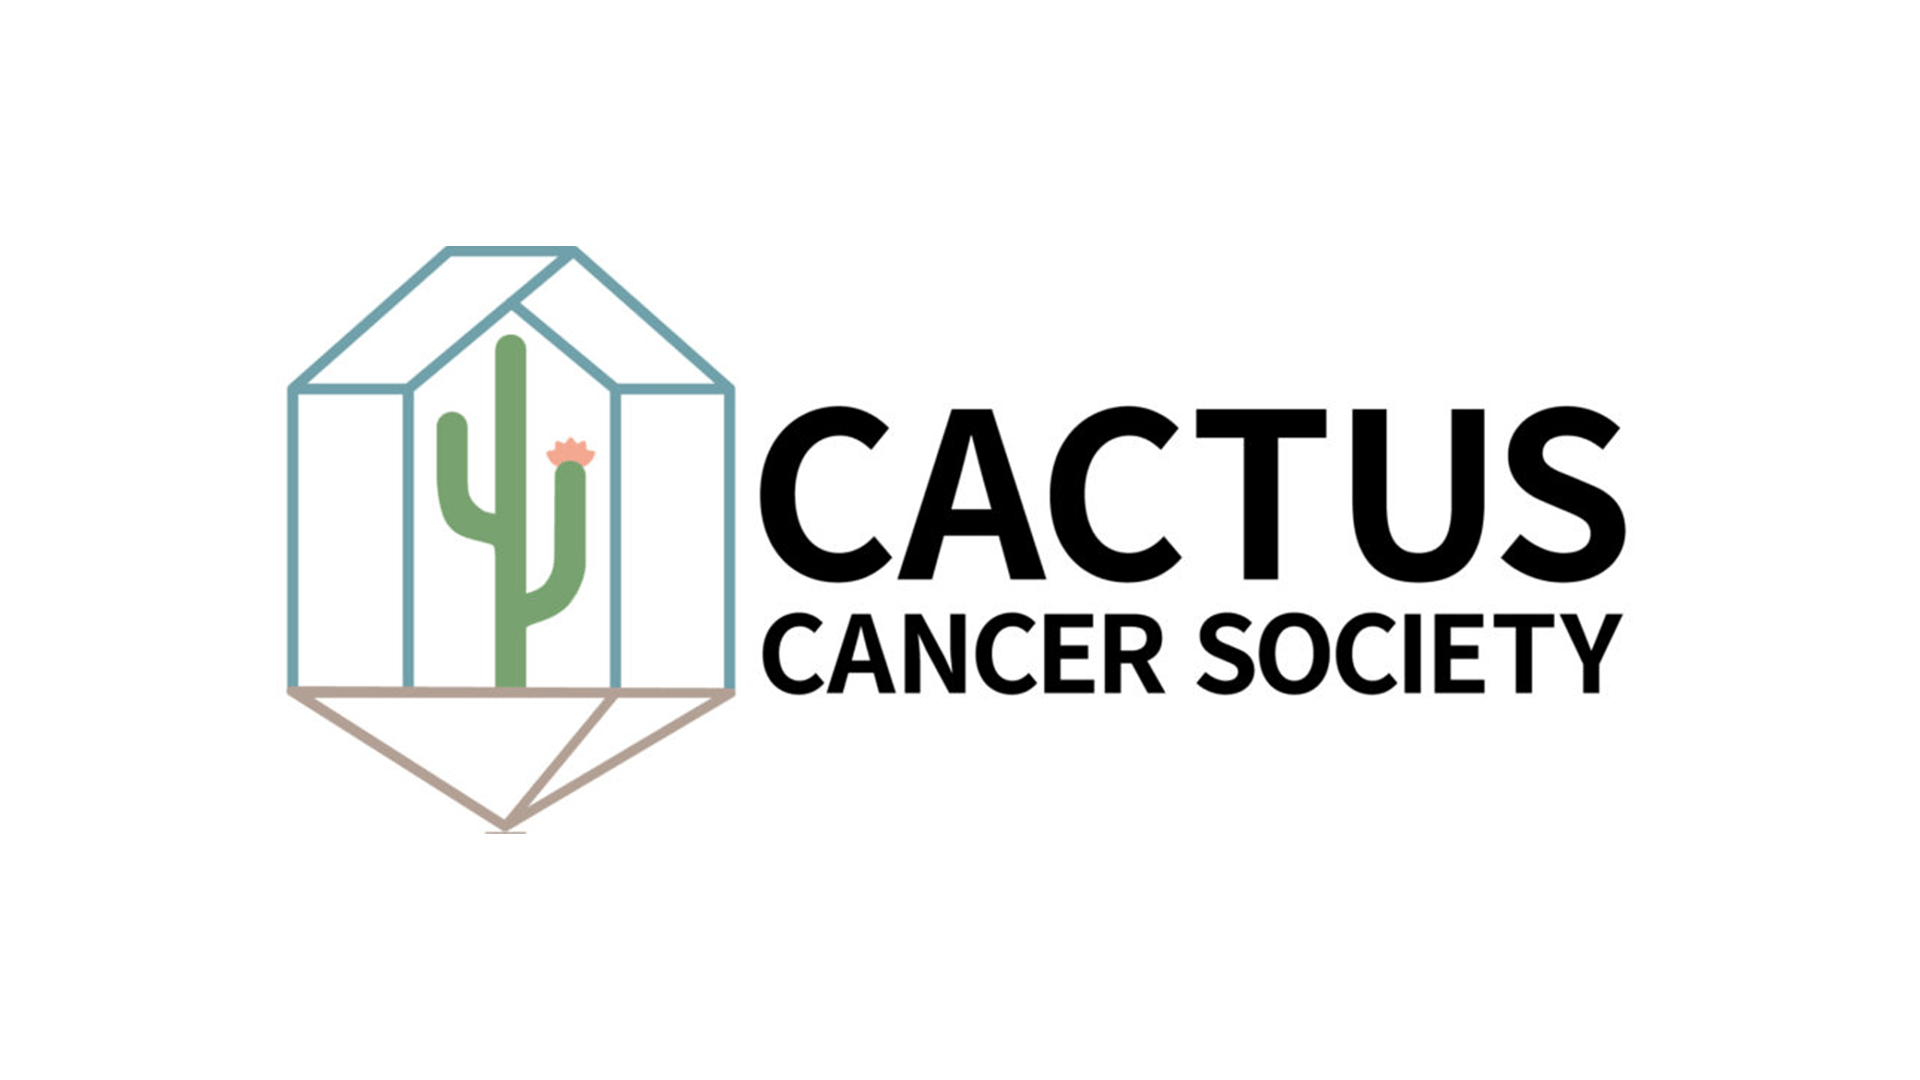 Cactus Cancer Society Logo